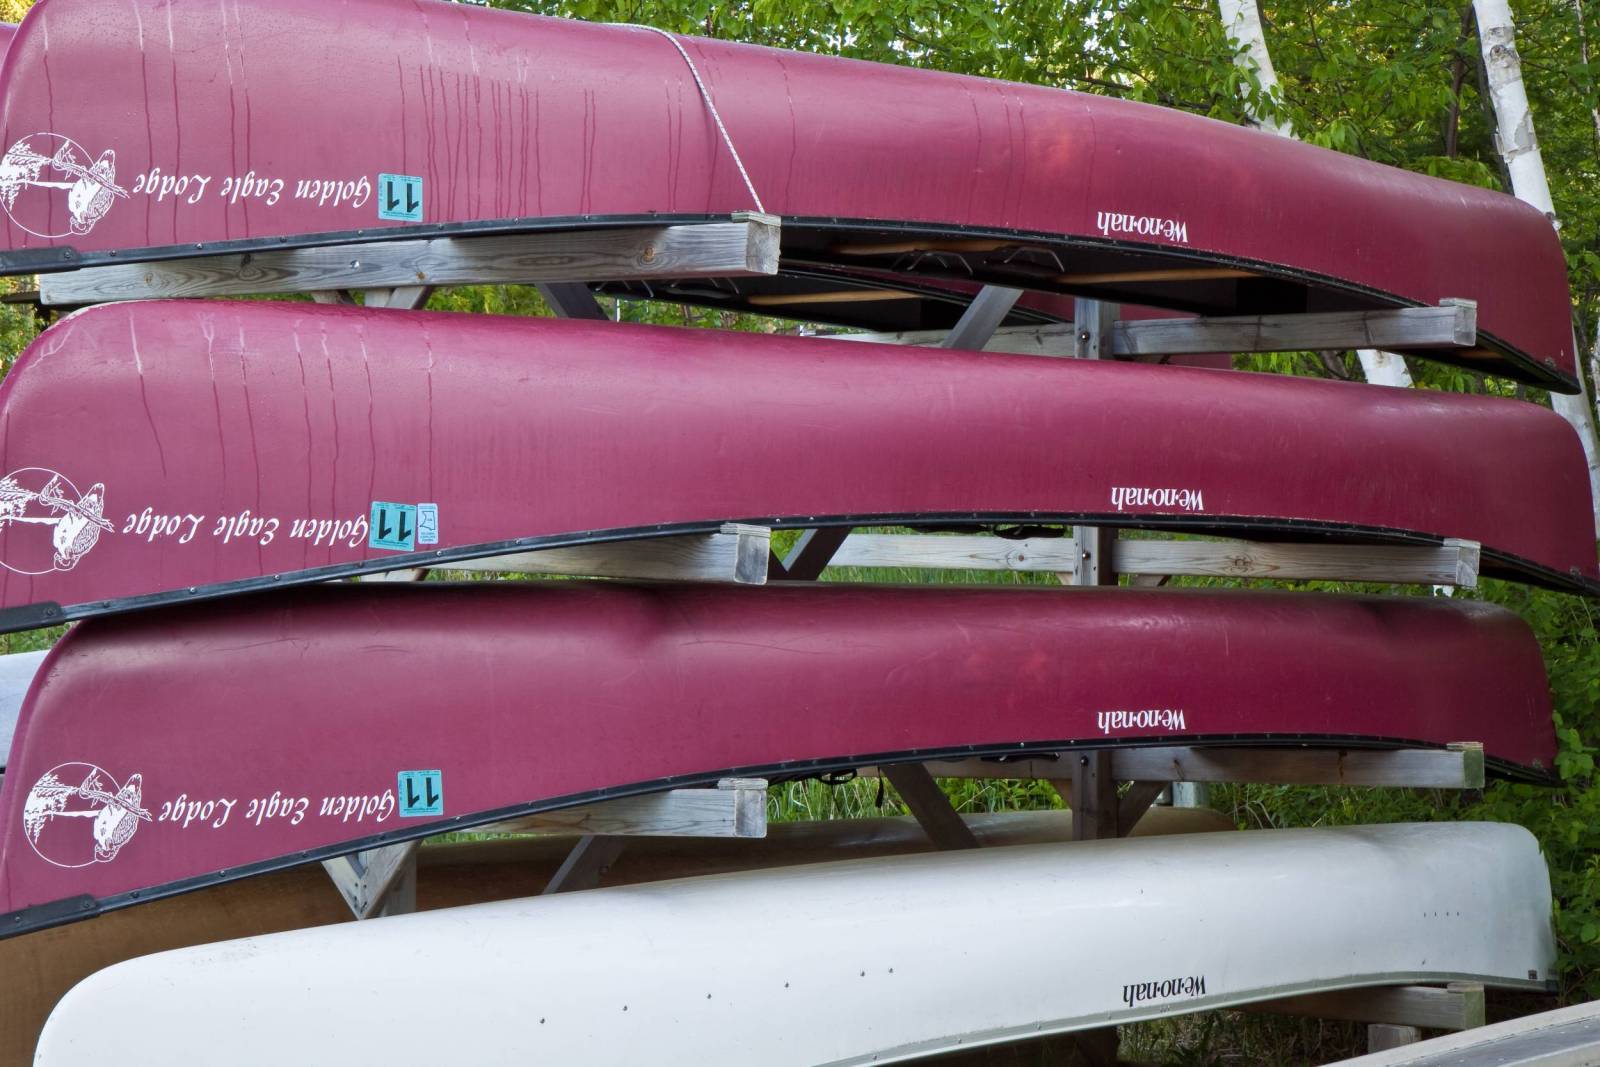 Canoes on storage rack